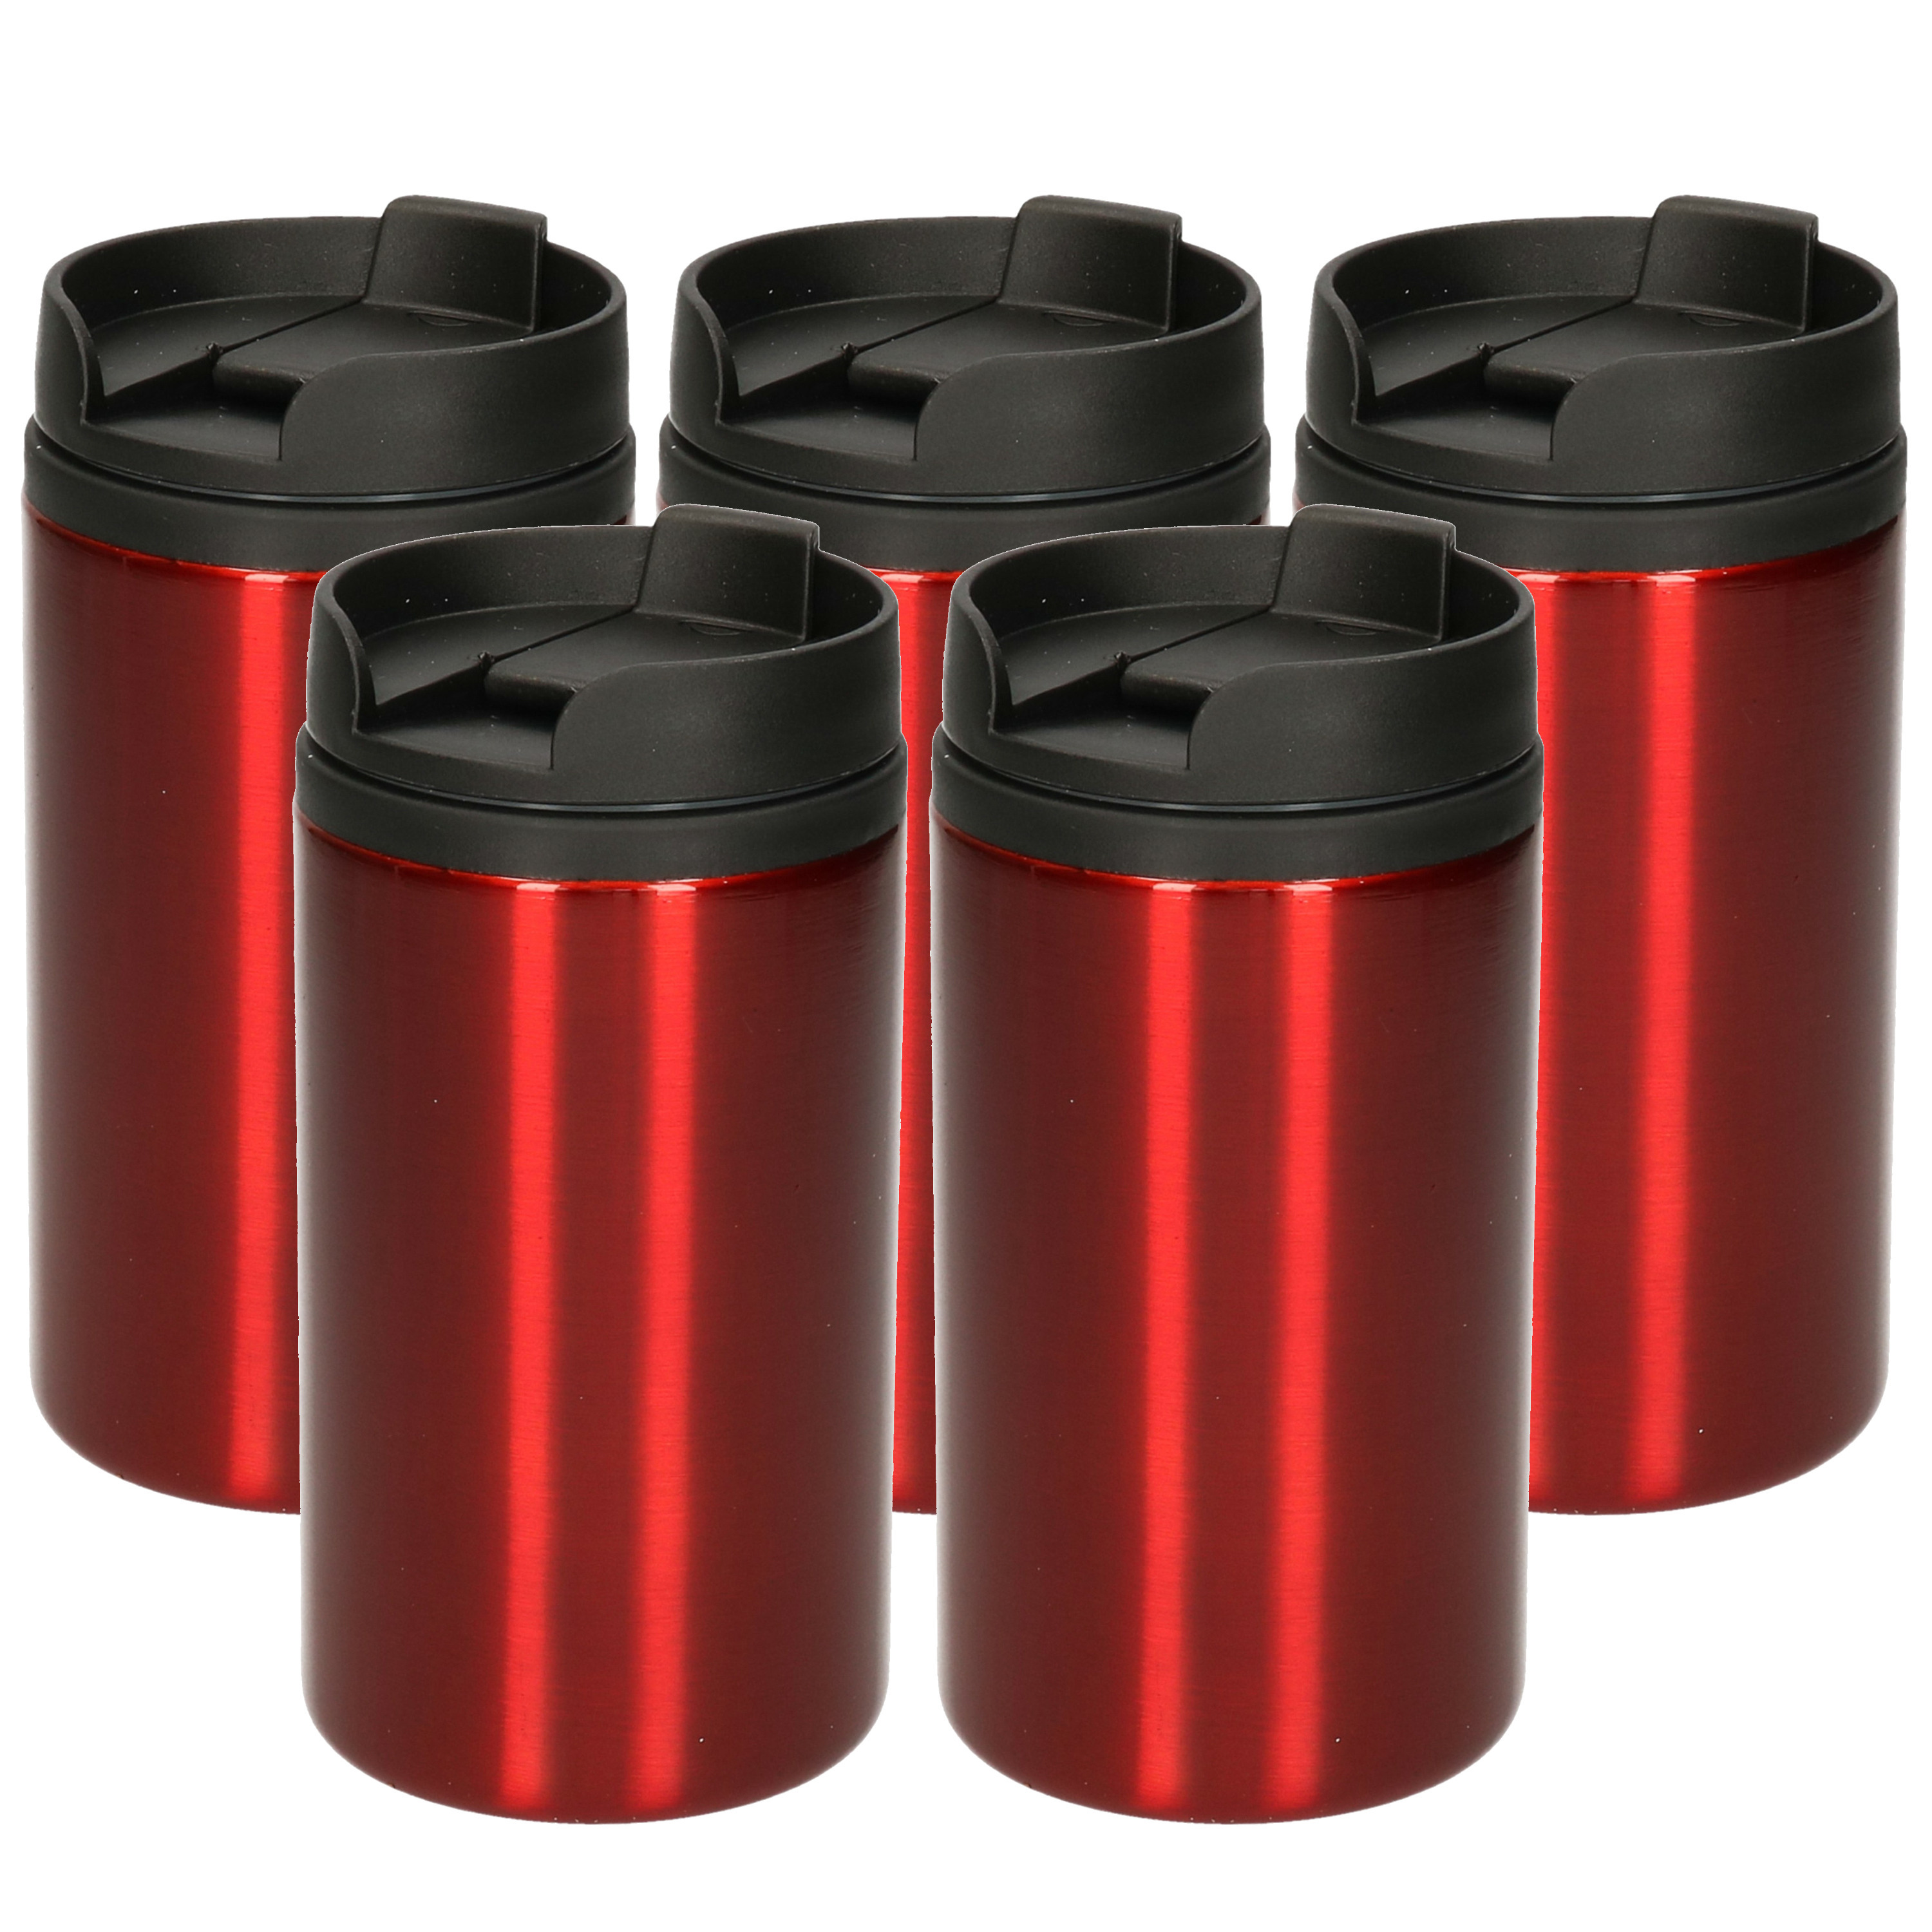 5x Isoleerbekers RVS metallic rood 320 ml